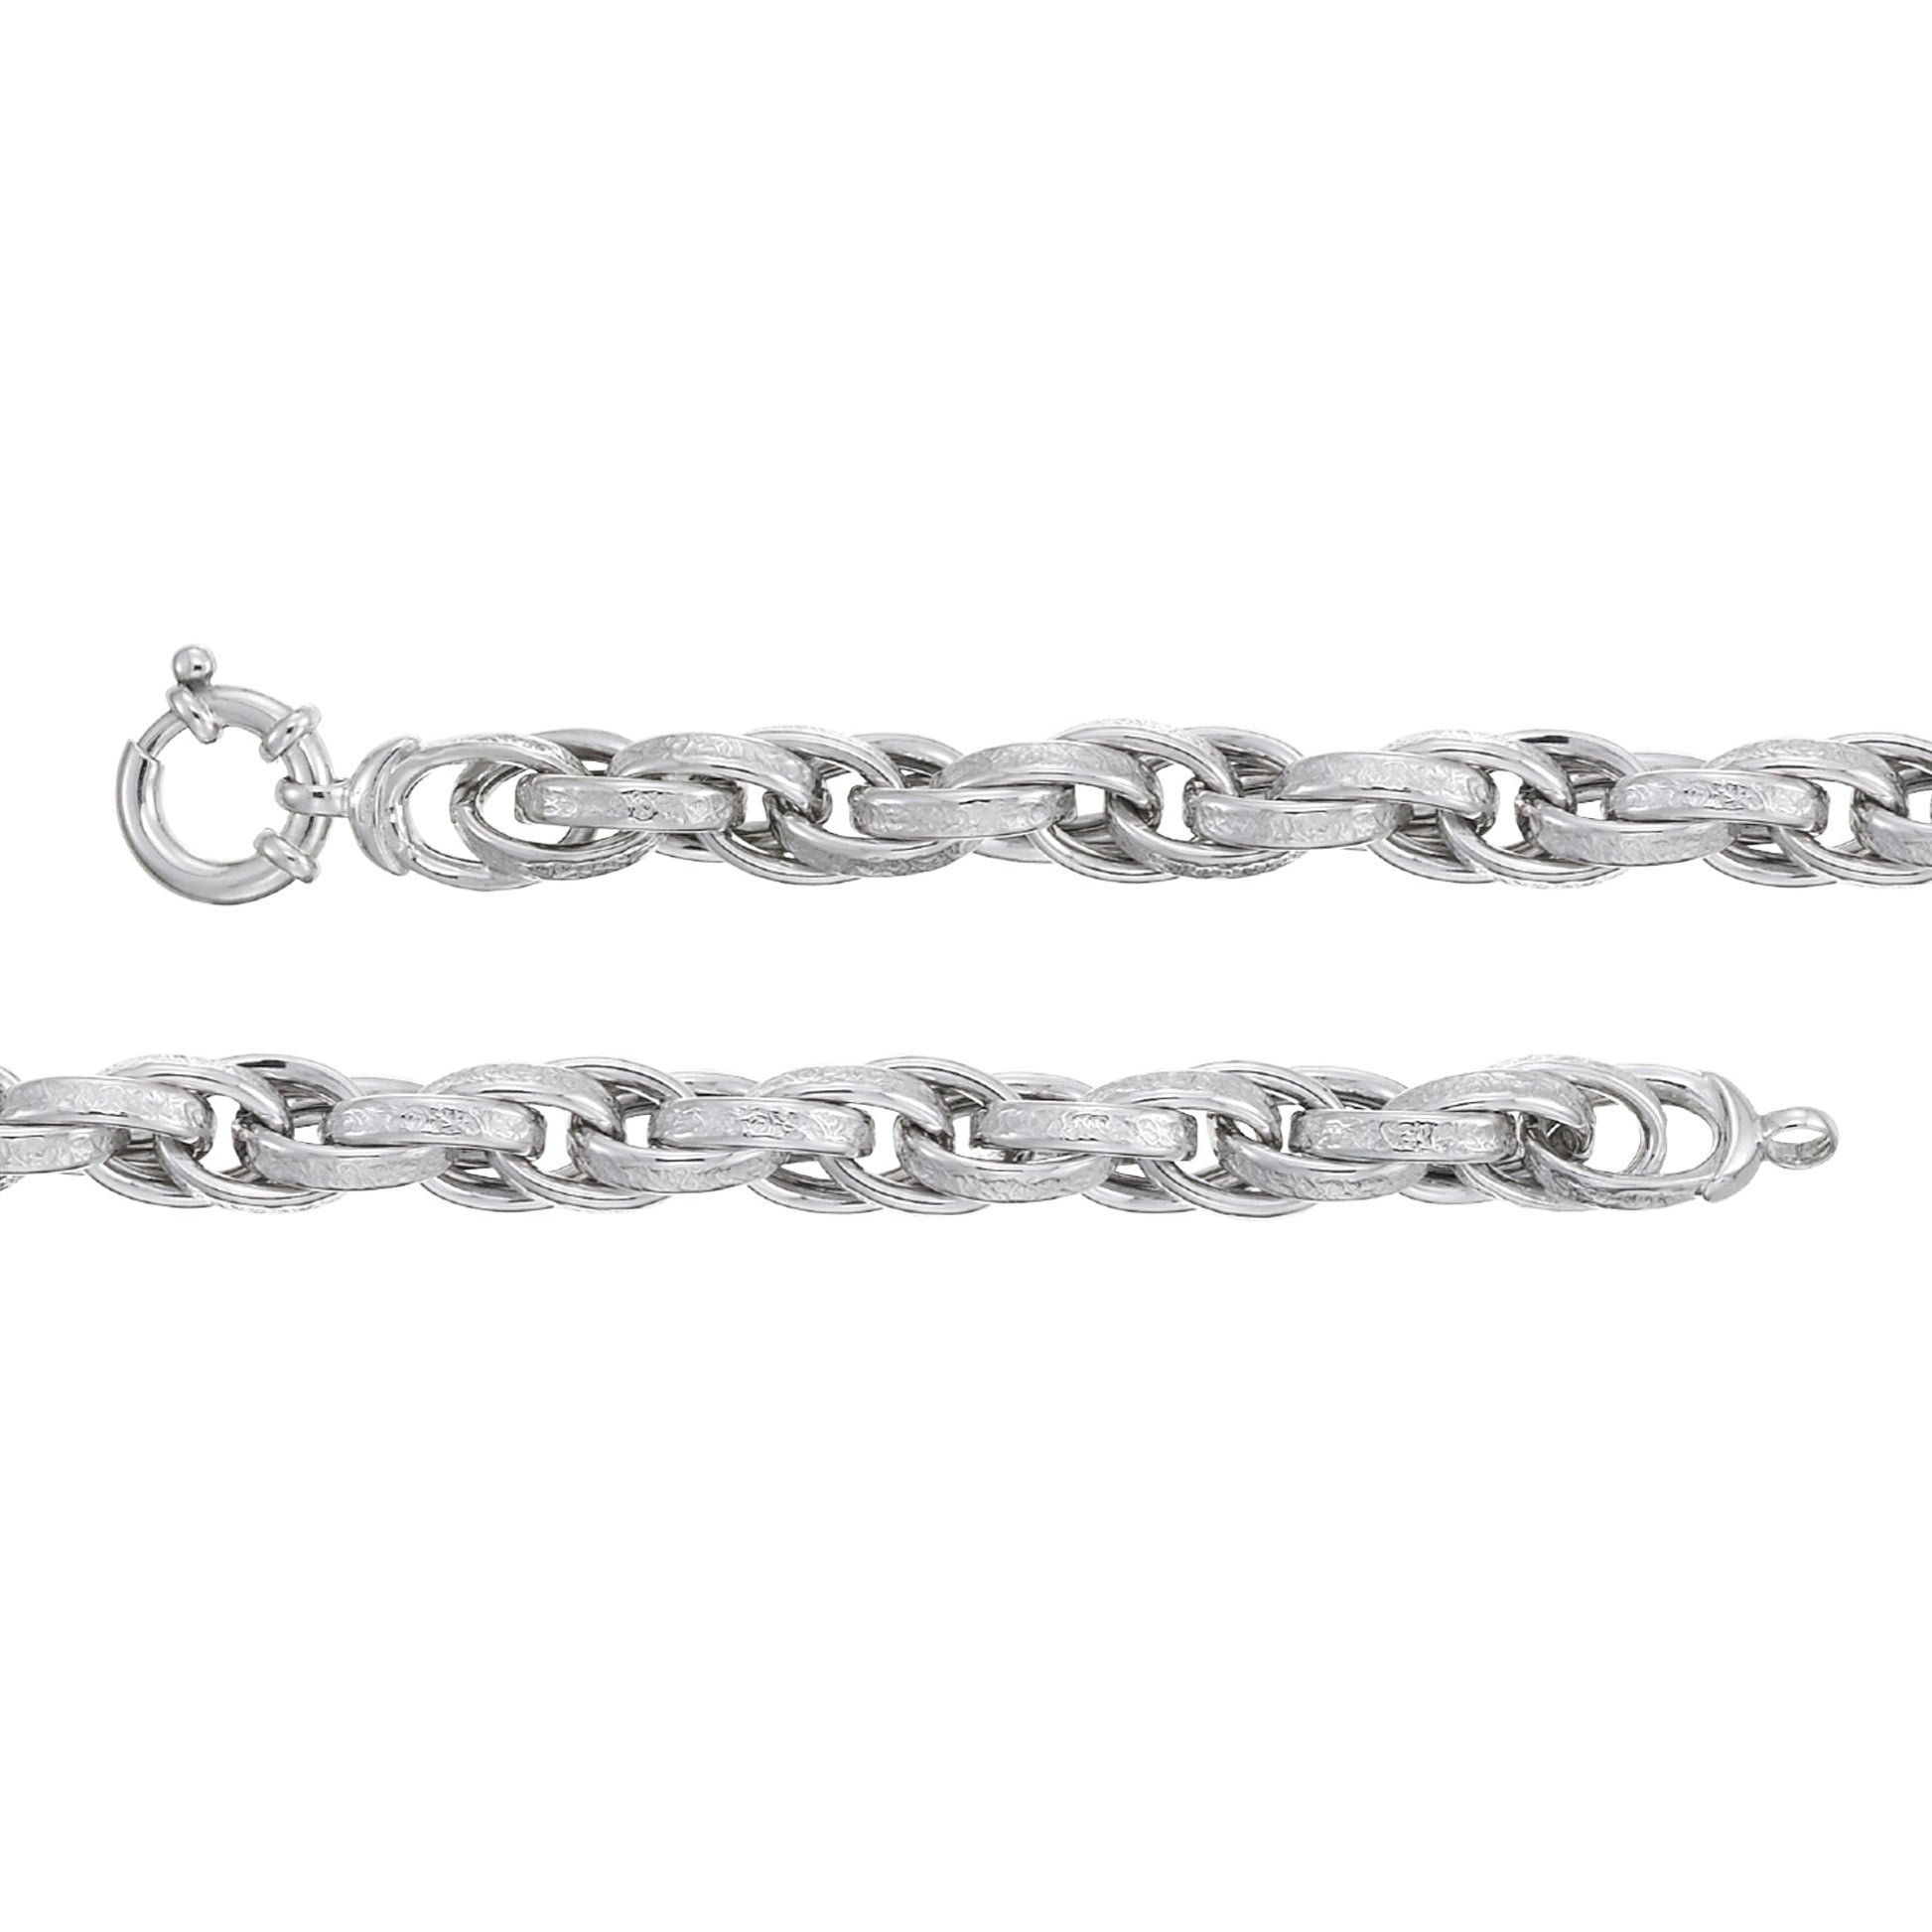 Franco Stellari Italian Sterling Silver Textured Chunky Rope Bracelet, 7.5"